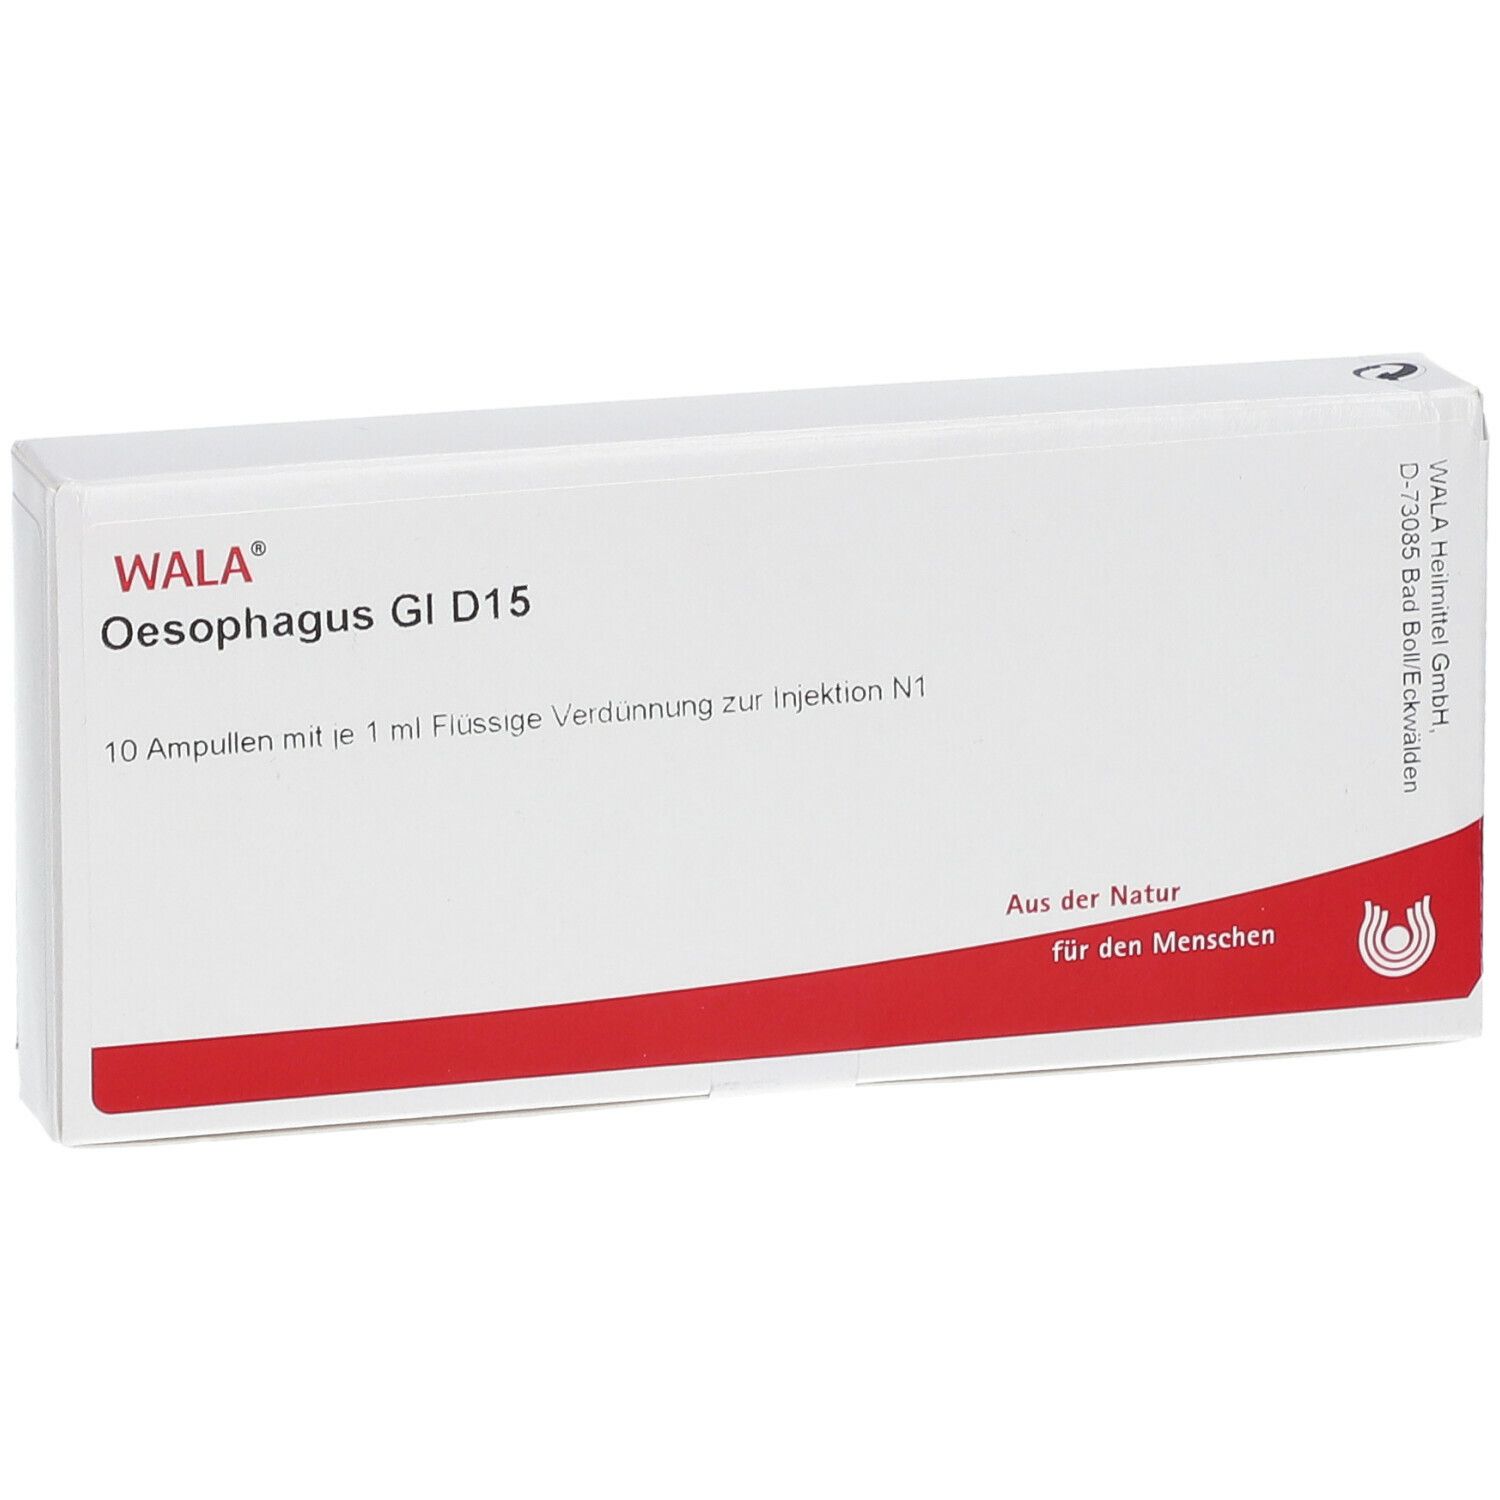 WALA® Oesophagus Gl D 15